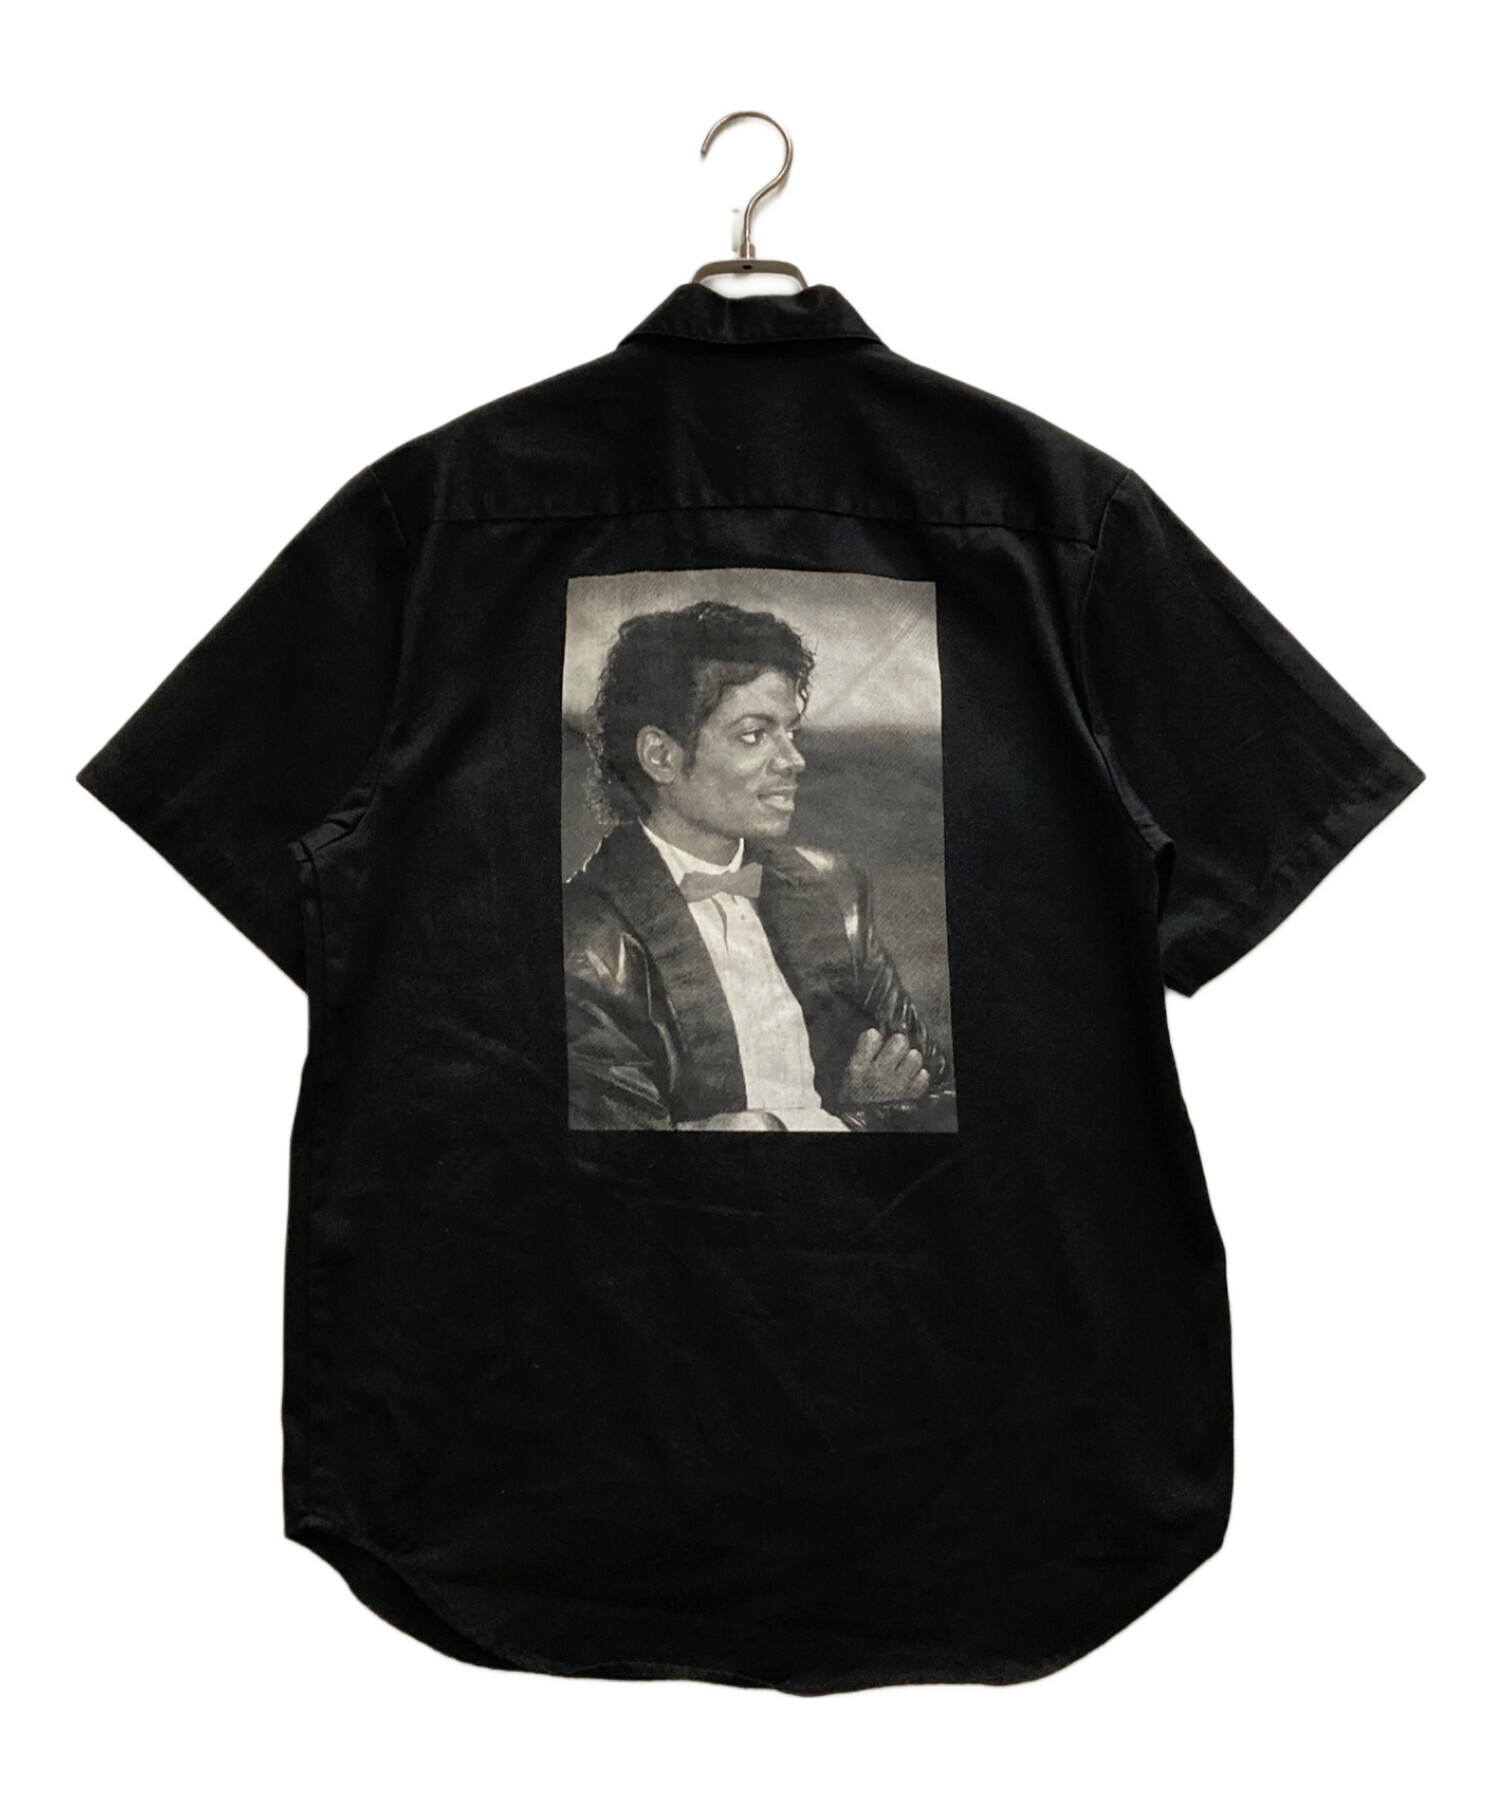 SUPREME (シュプリーム) Michael Jackson S/S Work Shirt ブラック サイズ:Ⅿ